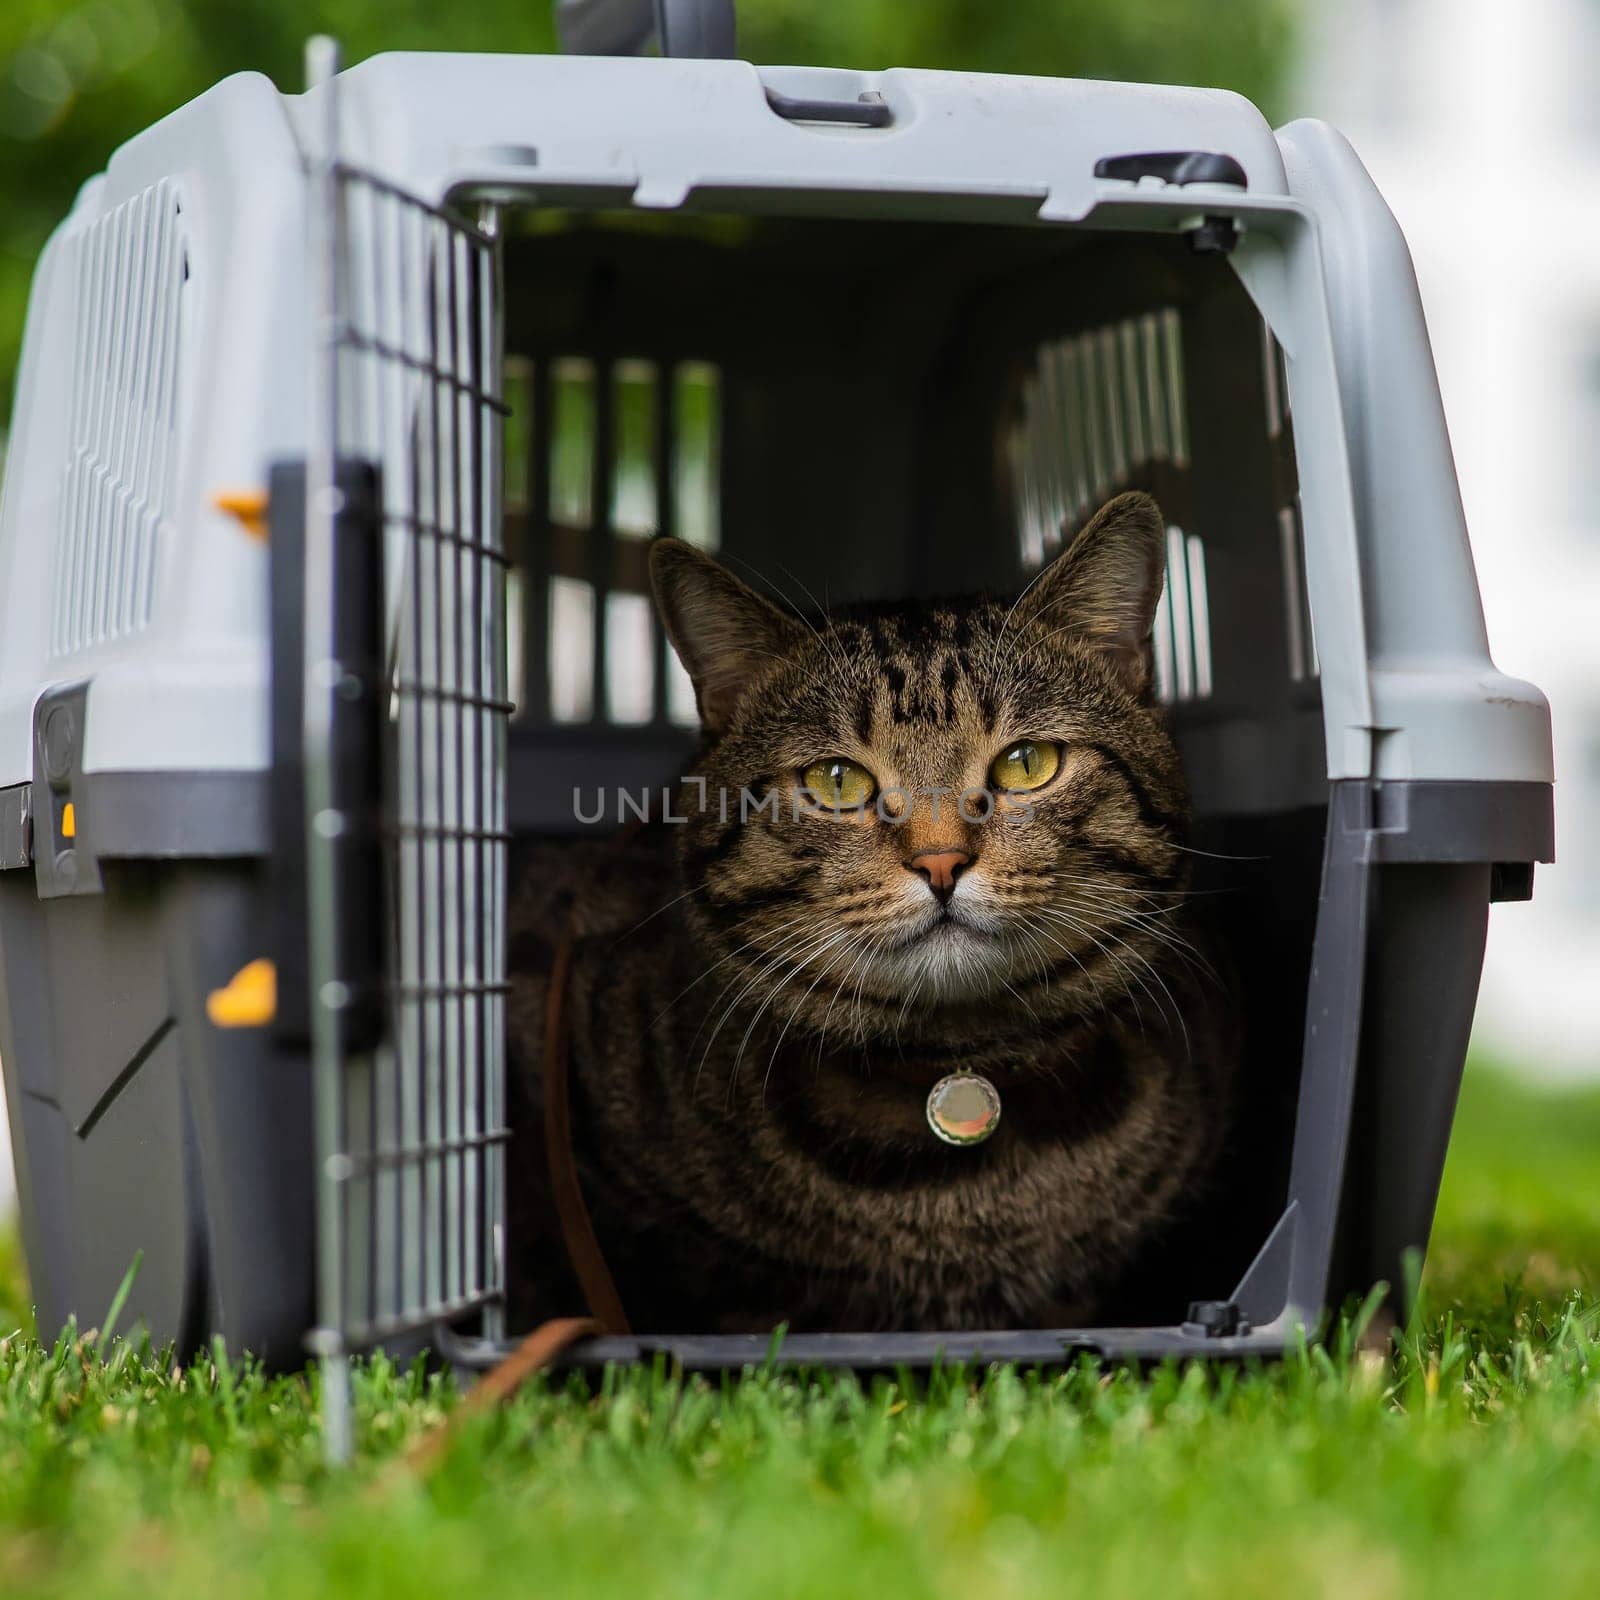 Calm confident gray tabby cat lies in a carrier on green grass outdoors